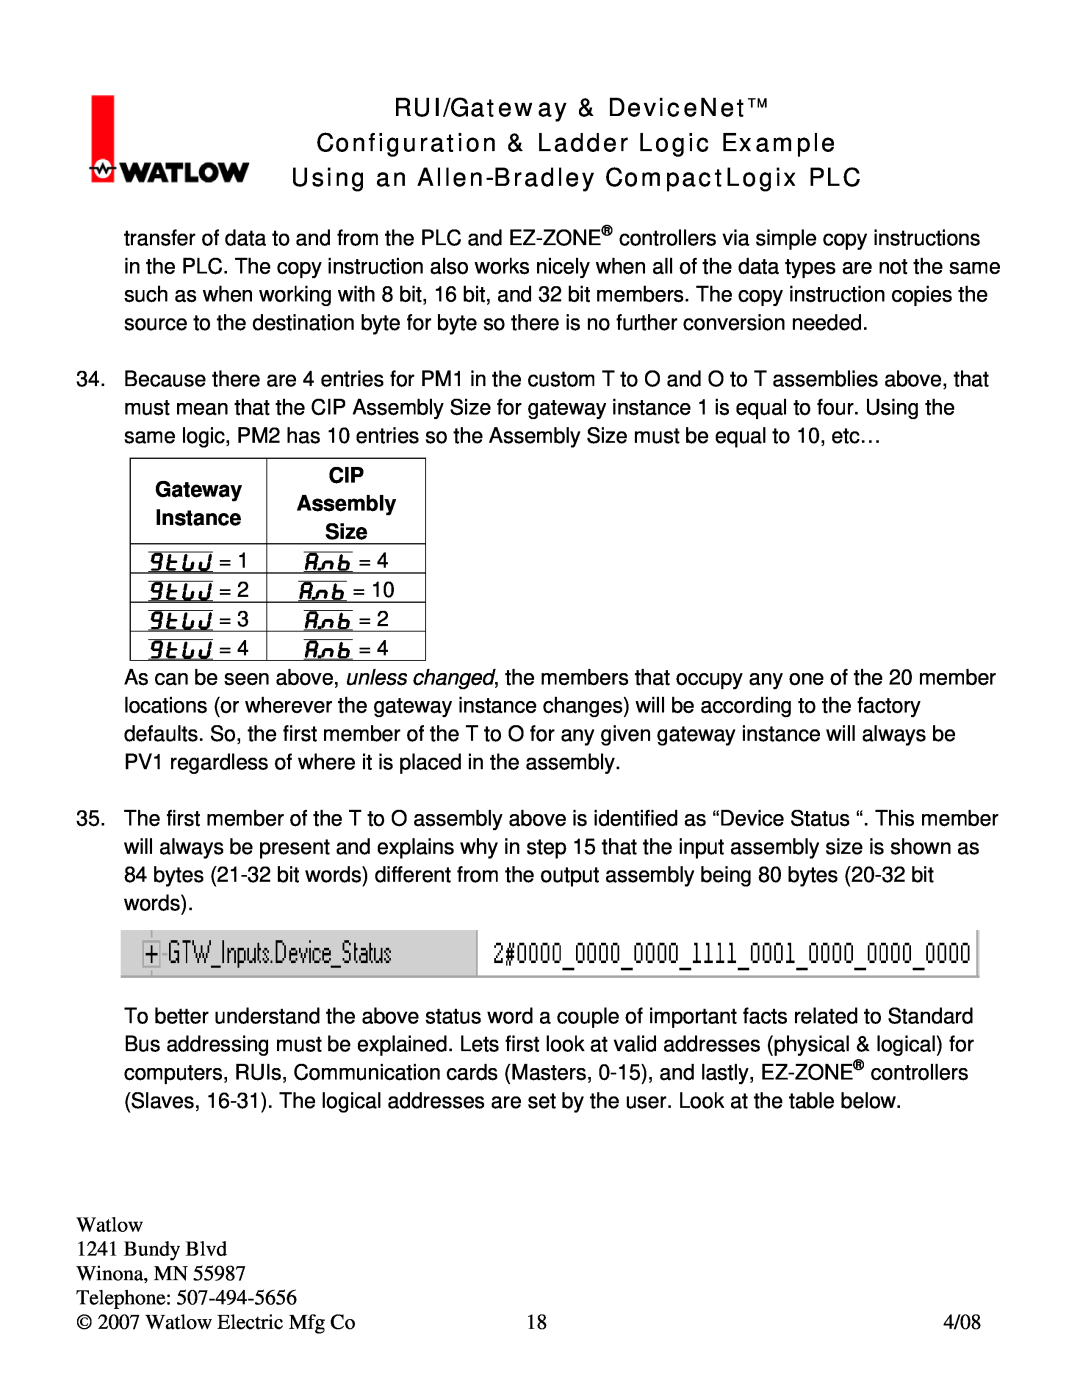 Watlow Electric manual Assembly, RUI/Gateway & DeviceNetTM Configuration & Ladder Logic Example 